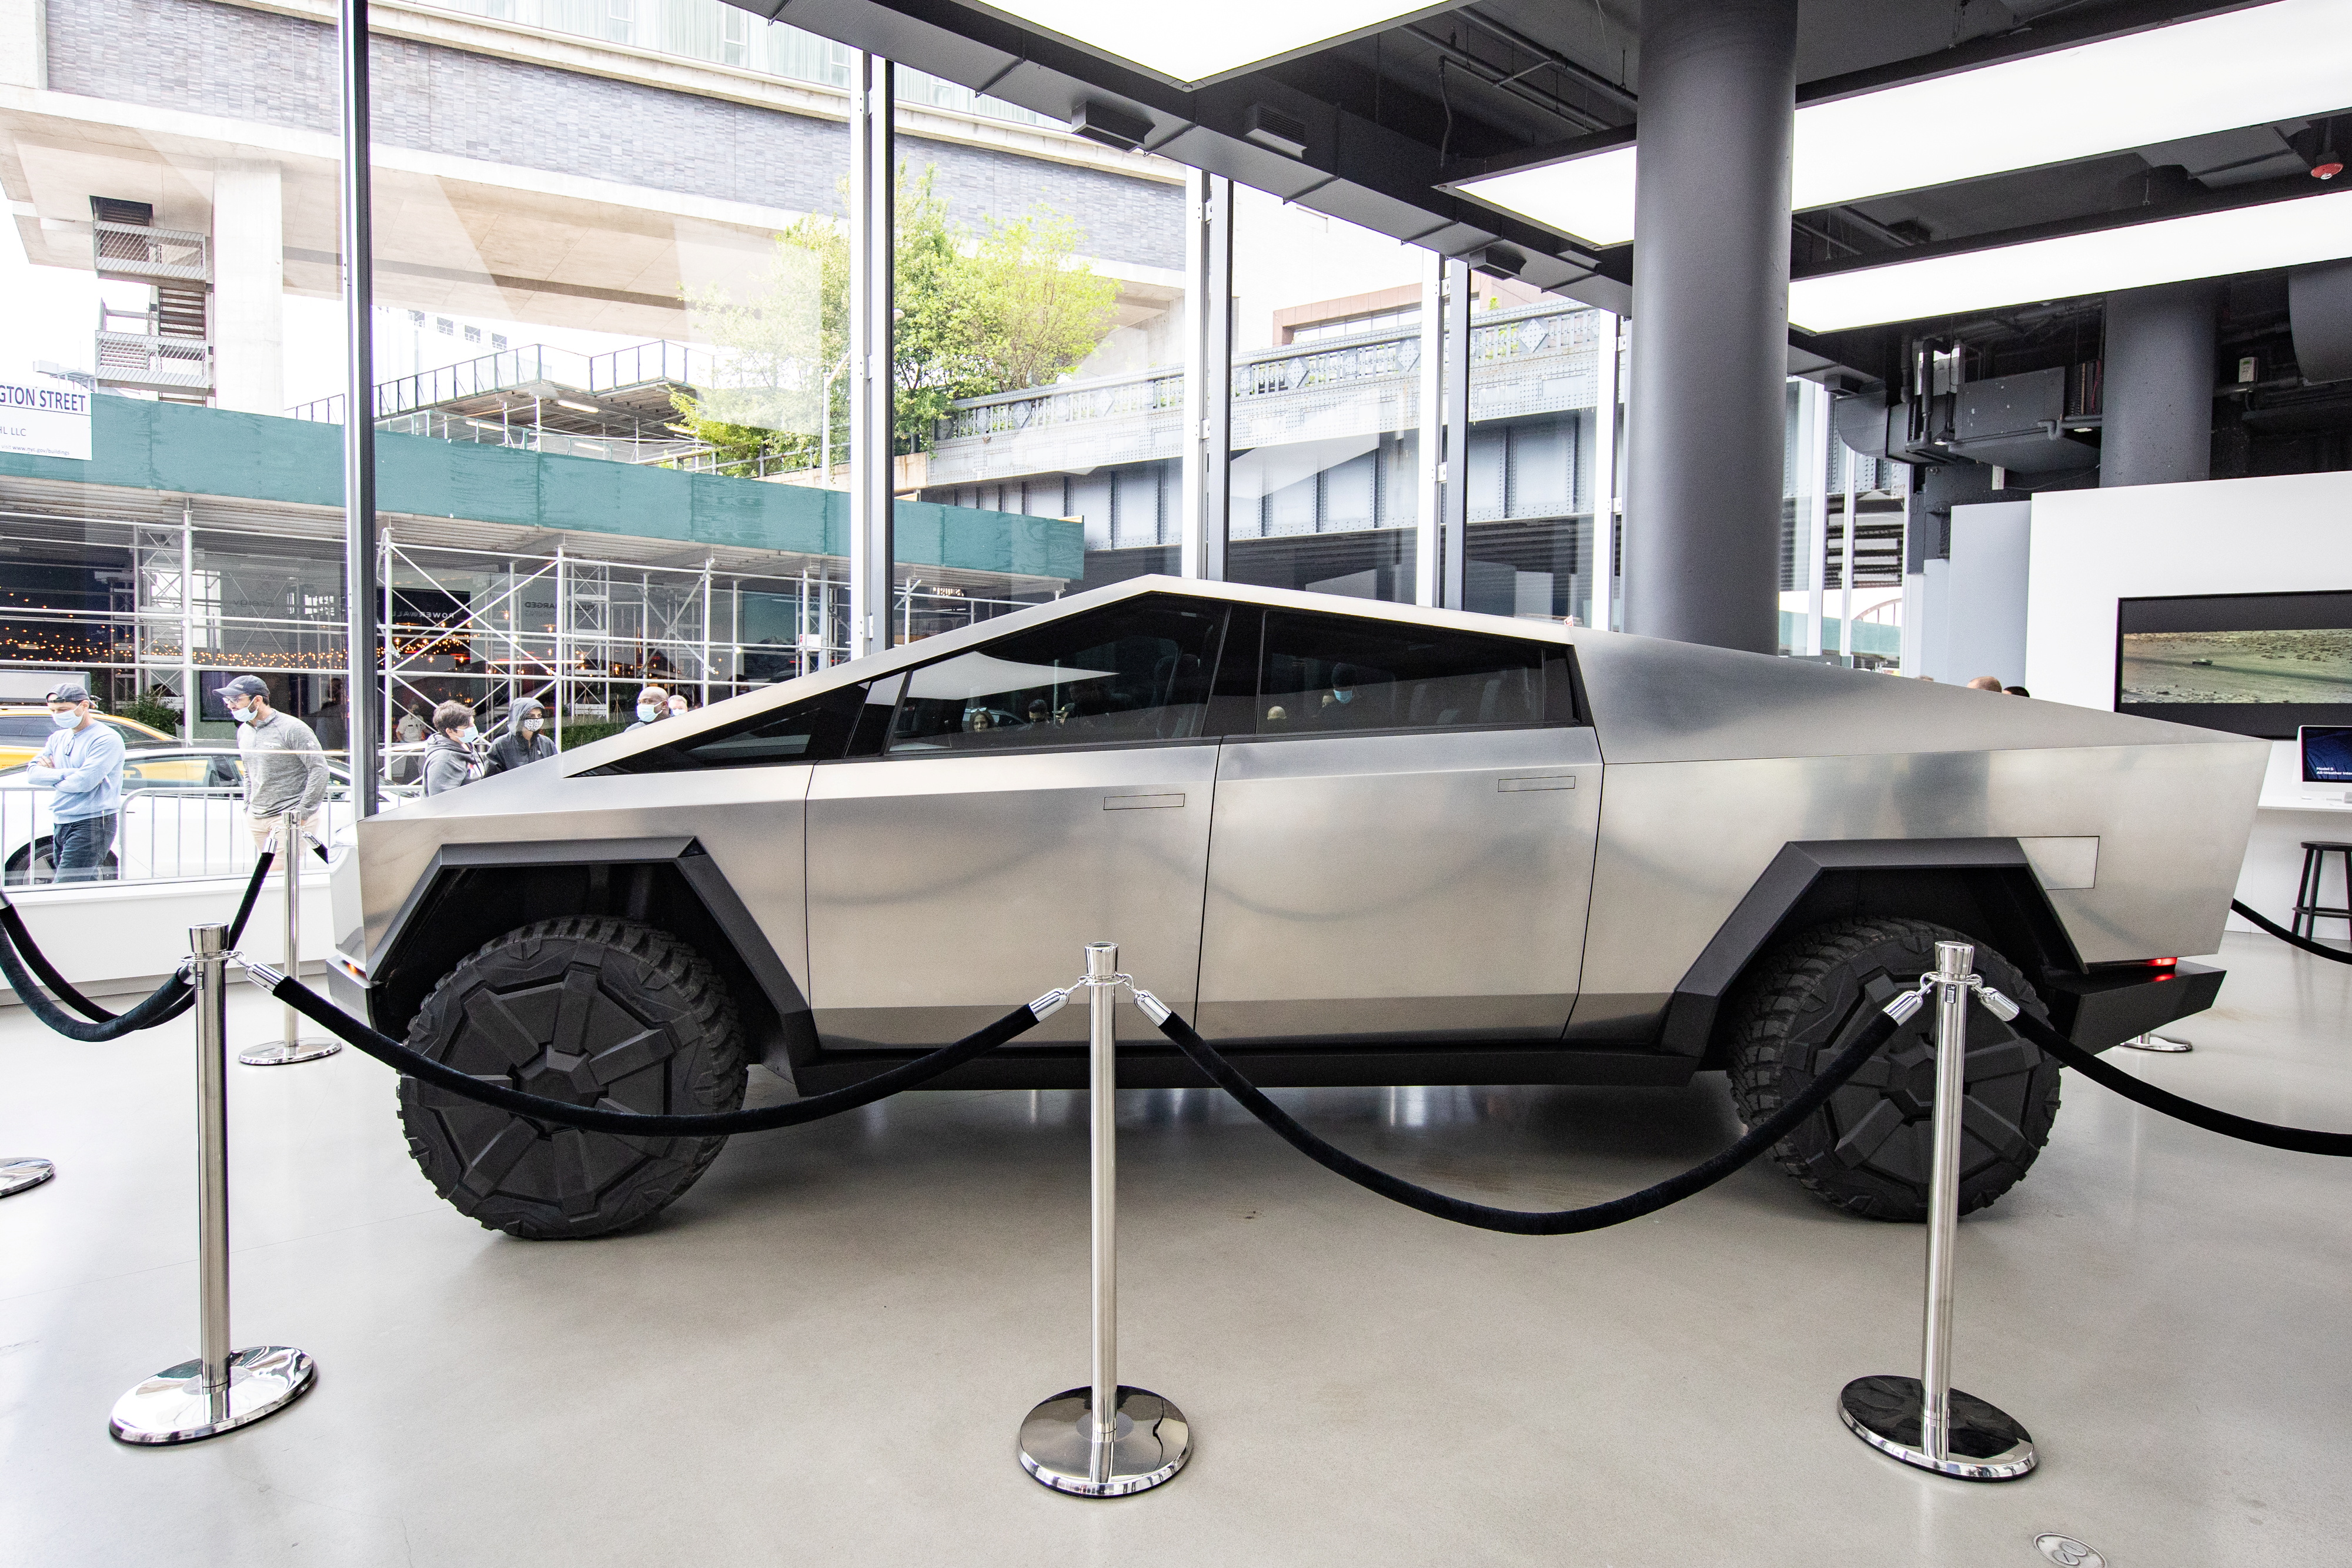 Tesla's Cybertruck is on display in Manhattan's Meatpacking District in New York